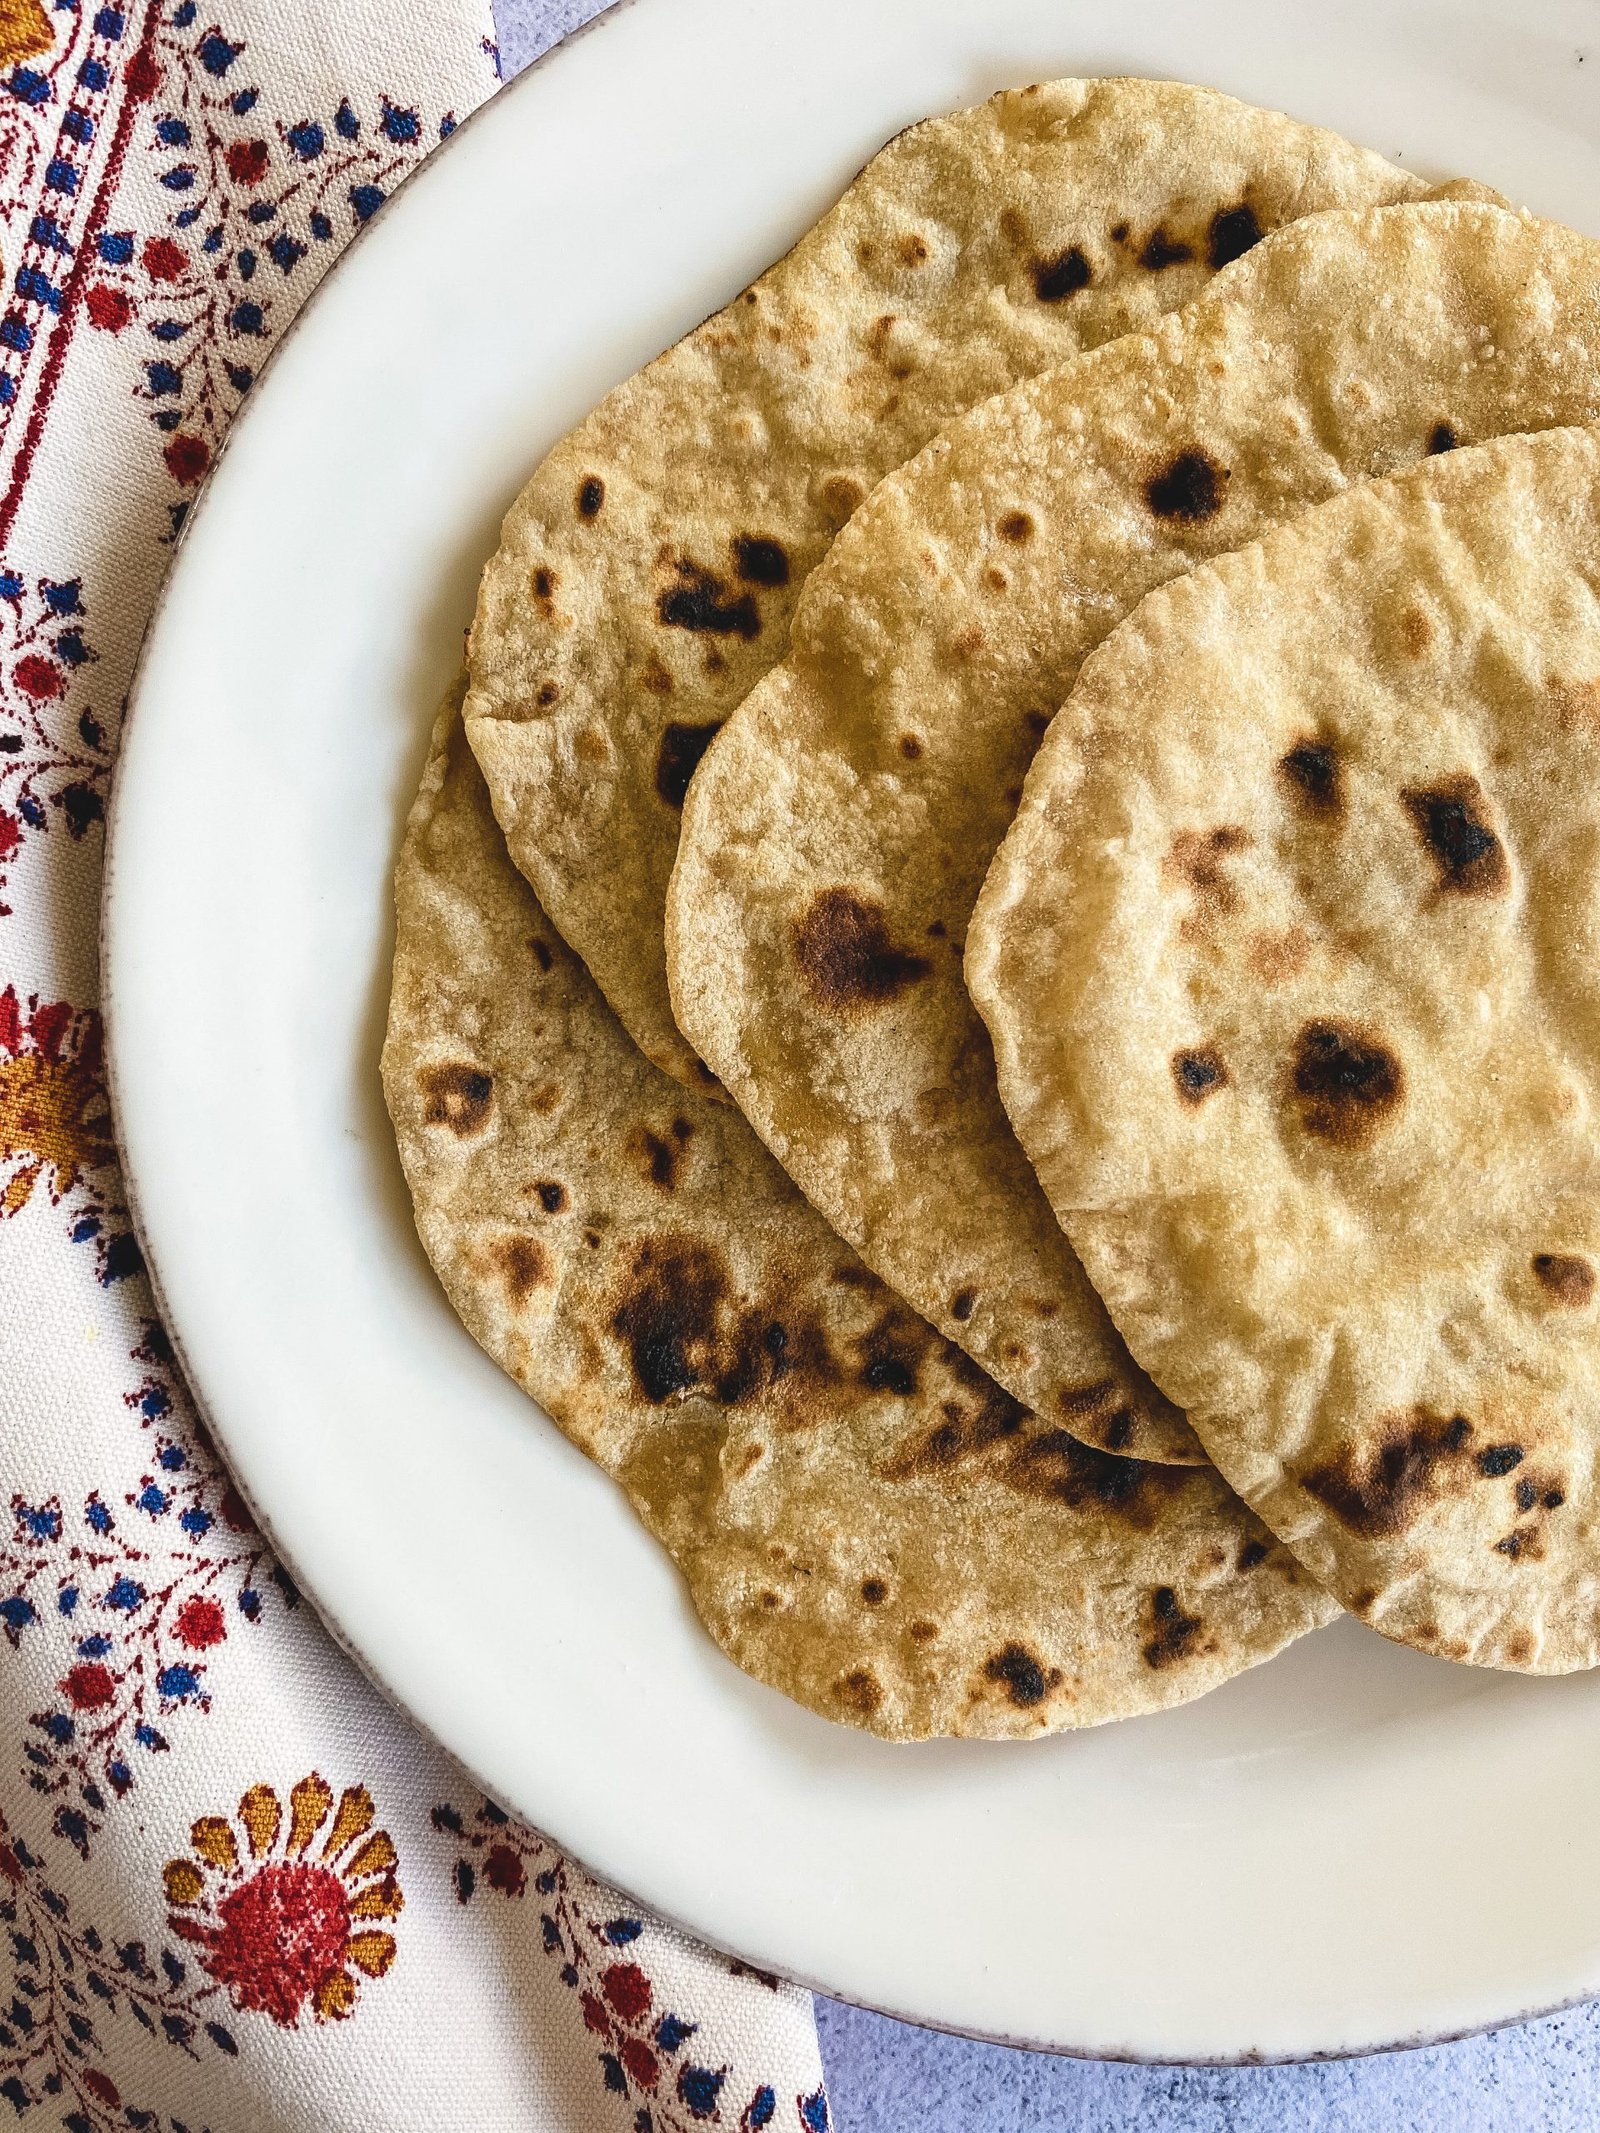 How to make super soft chapati (Indian roti): recipe & tips